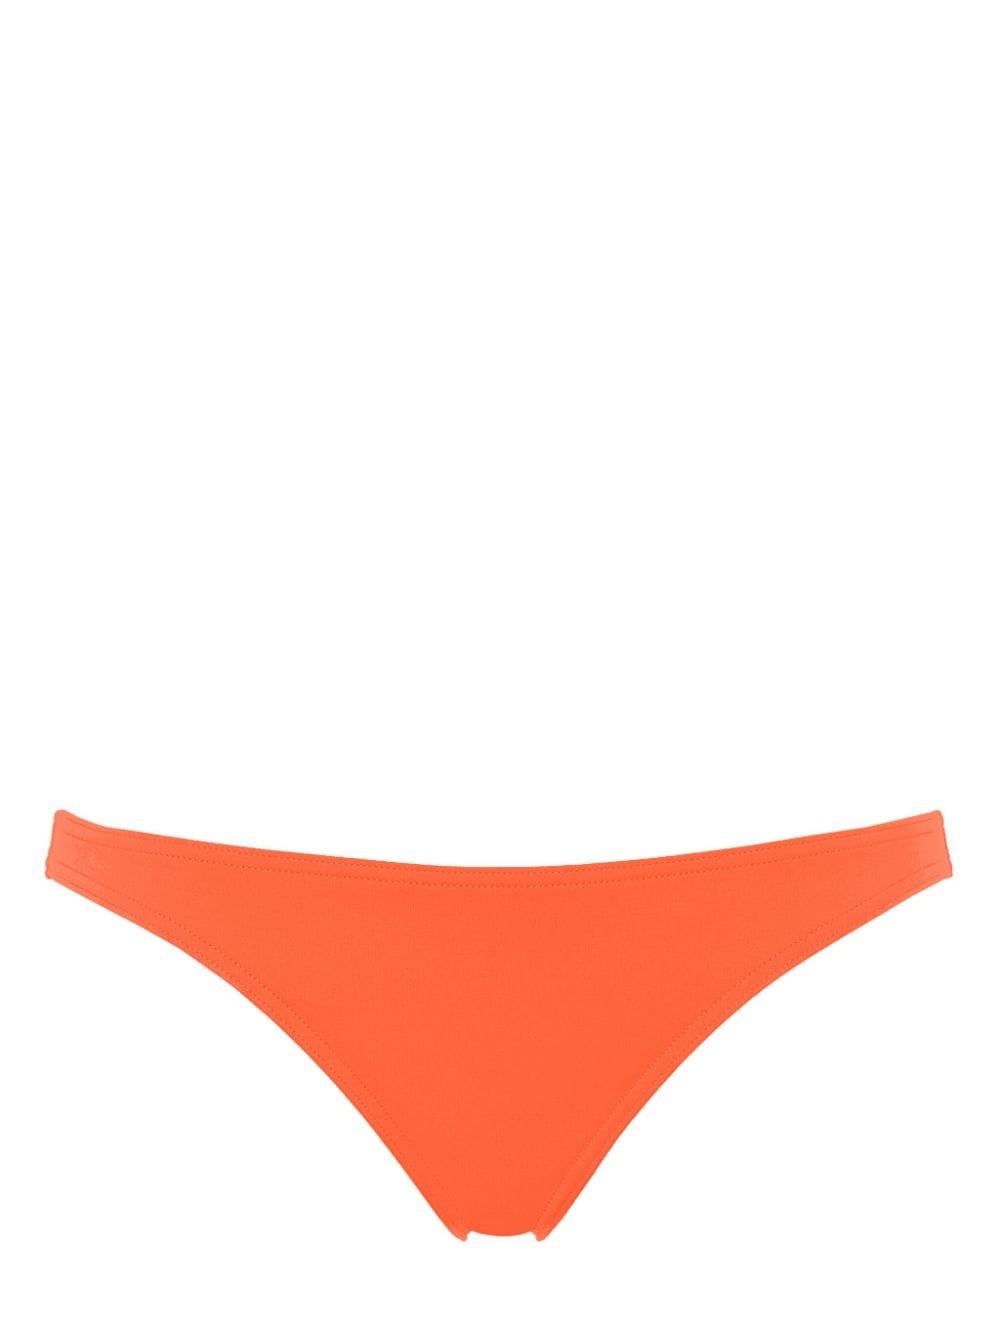 Fripon bikini bottoms - 1